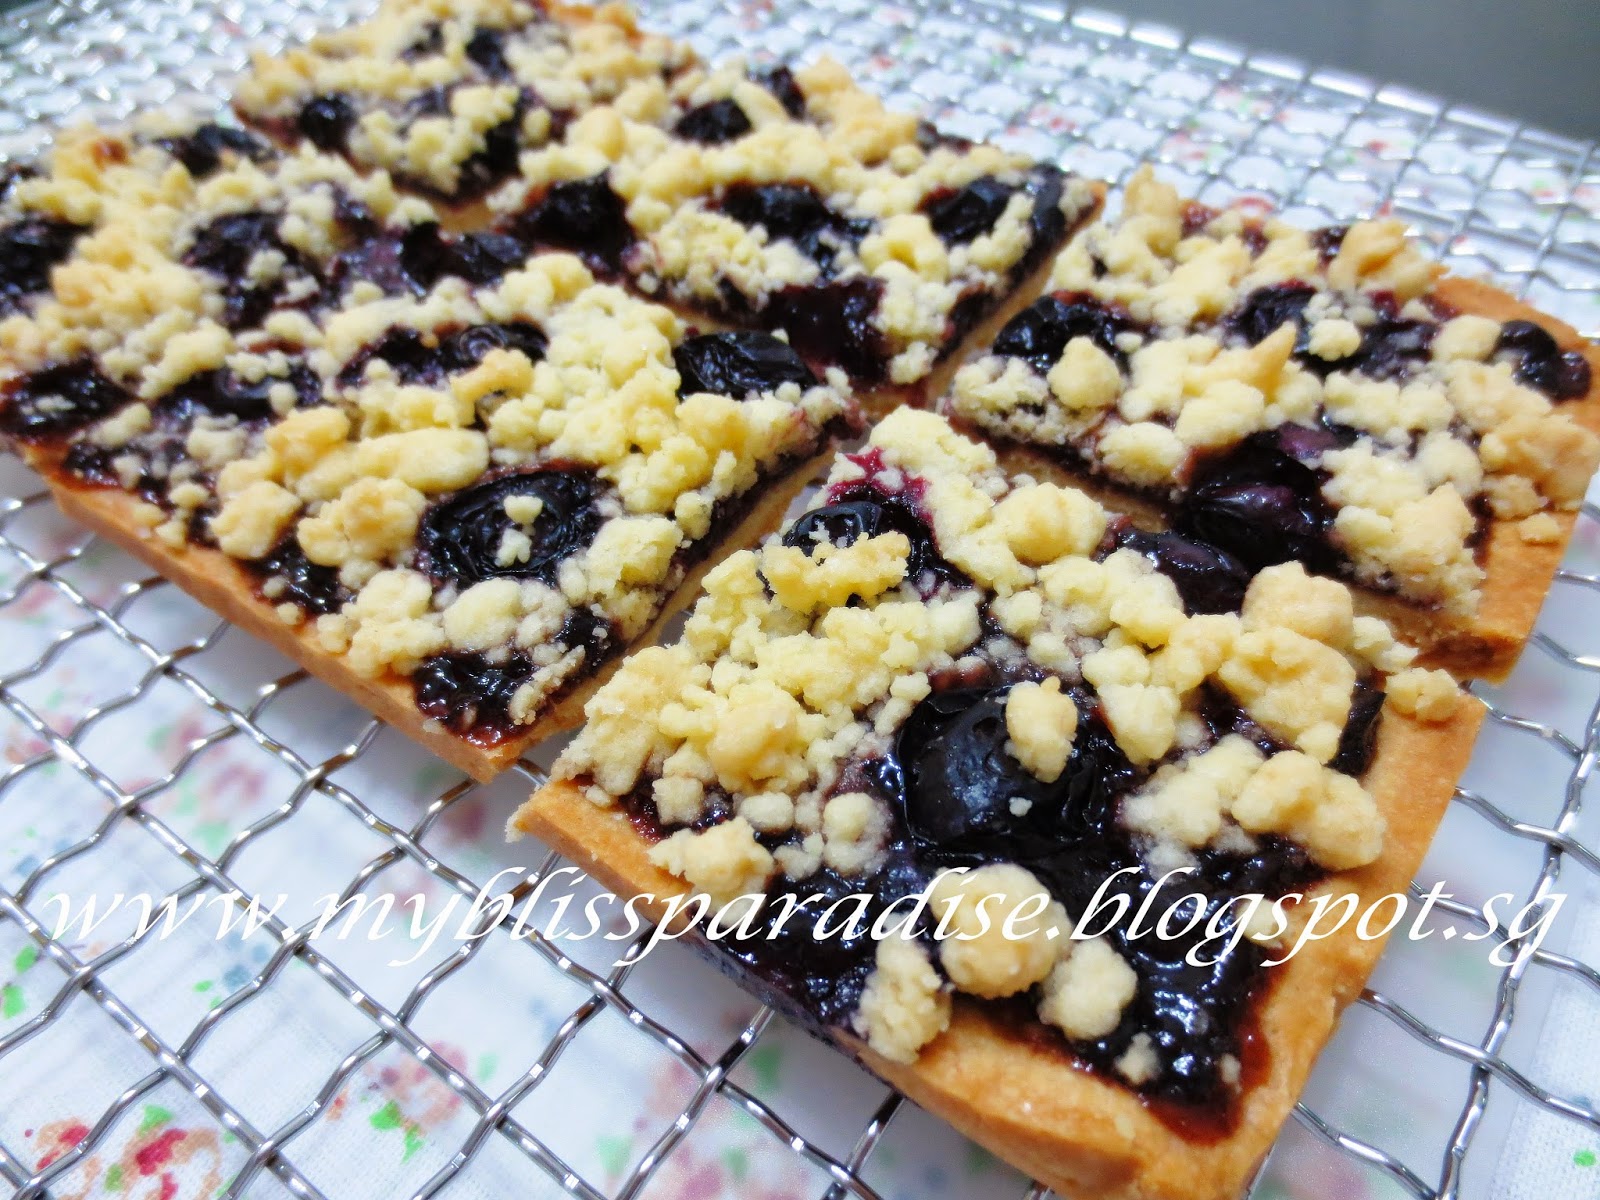 http://myblissparadise.blogspot.sg/2014/06/four-berries-crumble-tarts-27-jun-14.html